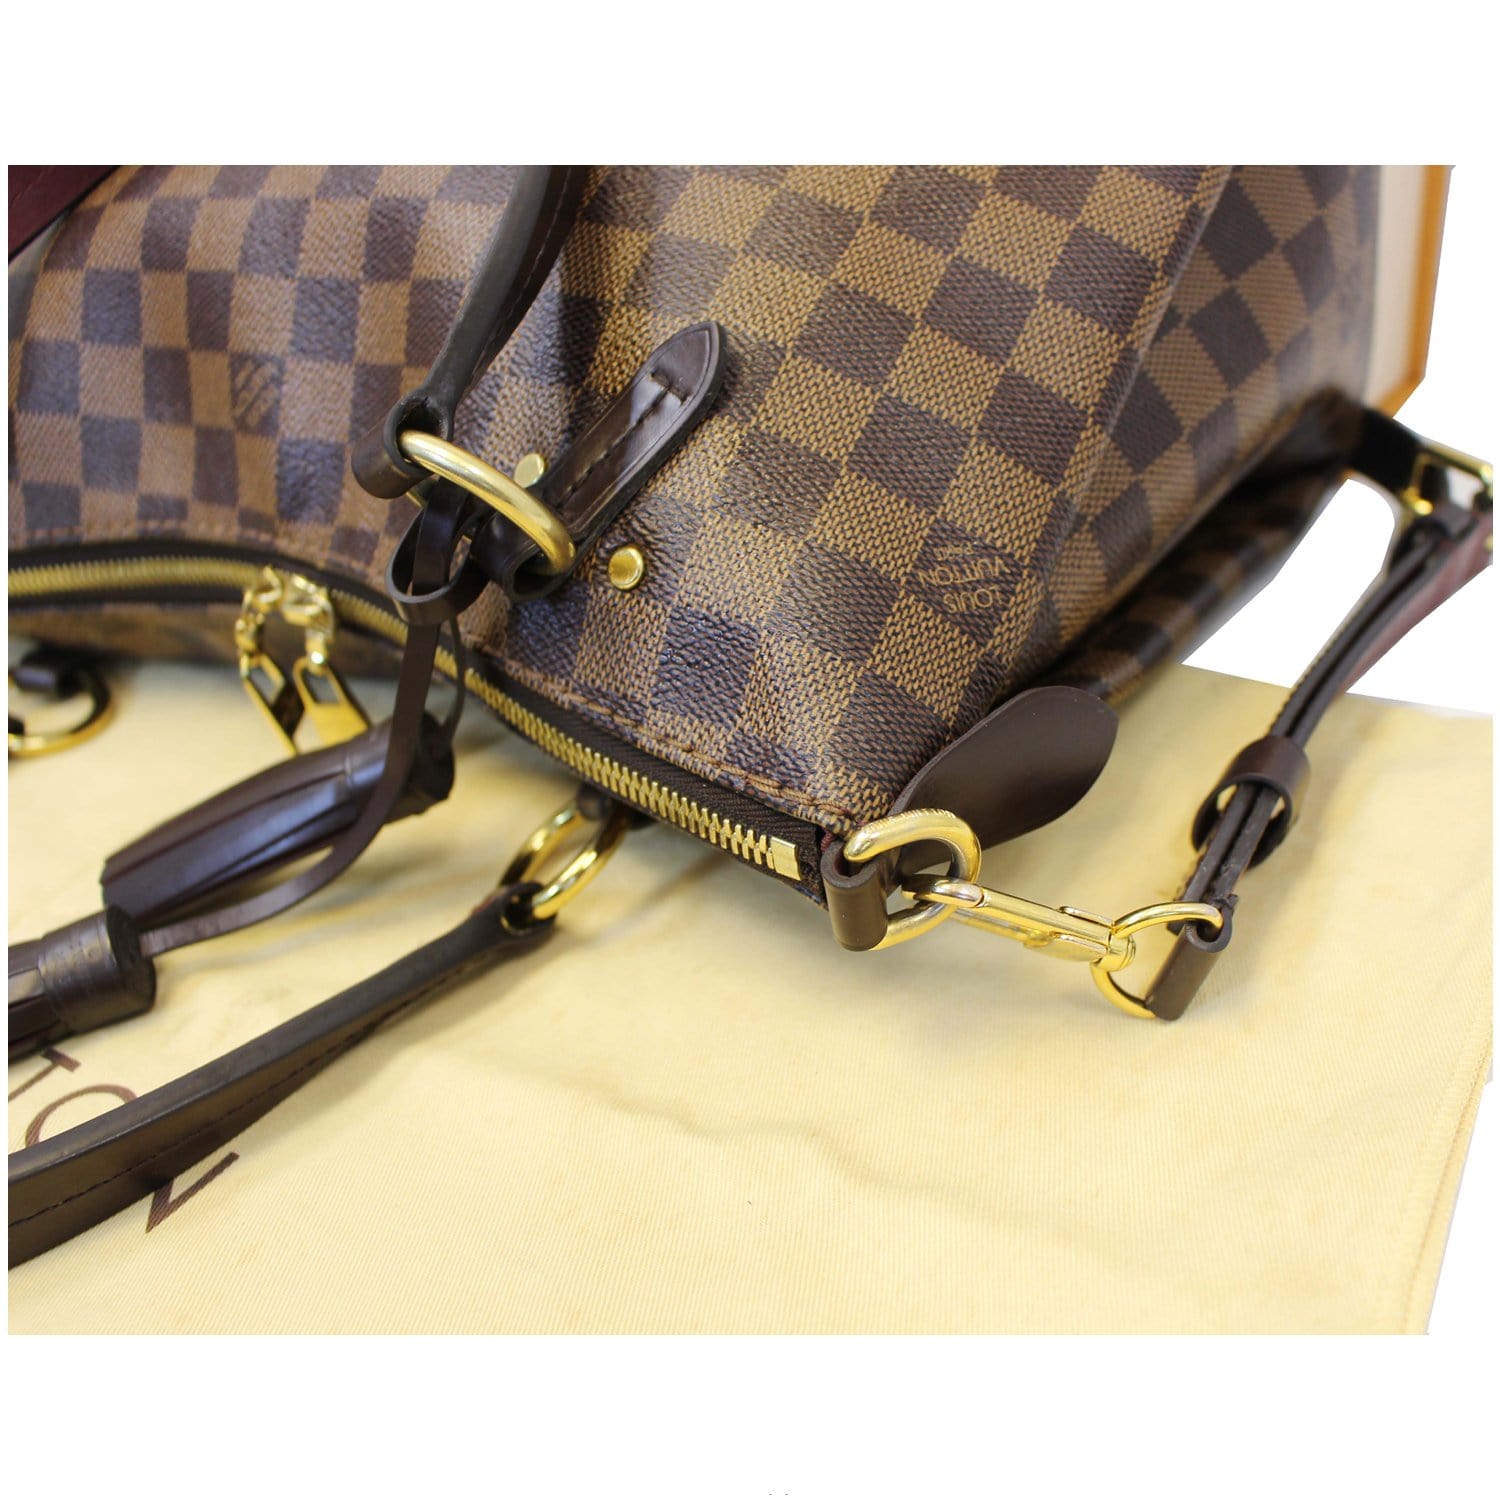 Louis Vuitton - Authenticated Lymington Handbag - Leather White for Women, Good Condition